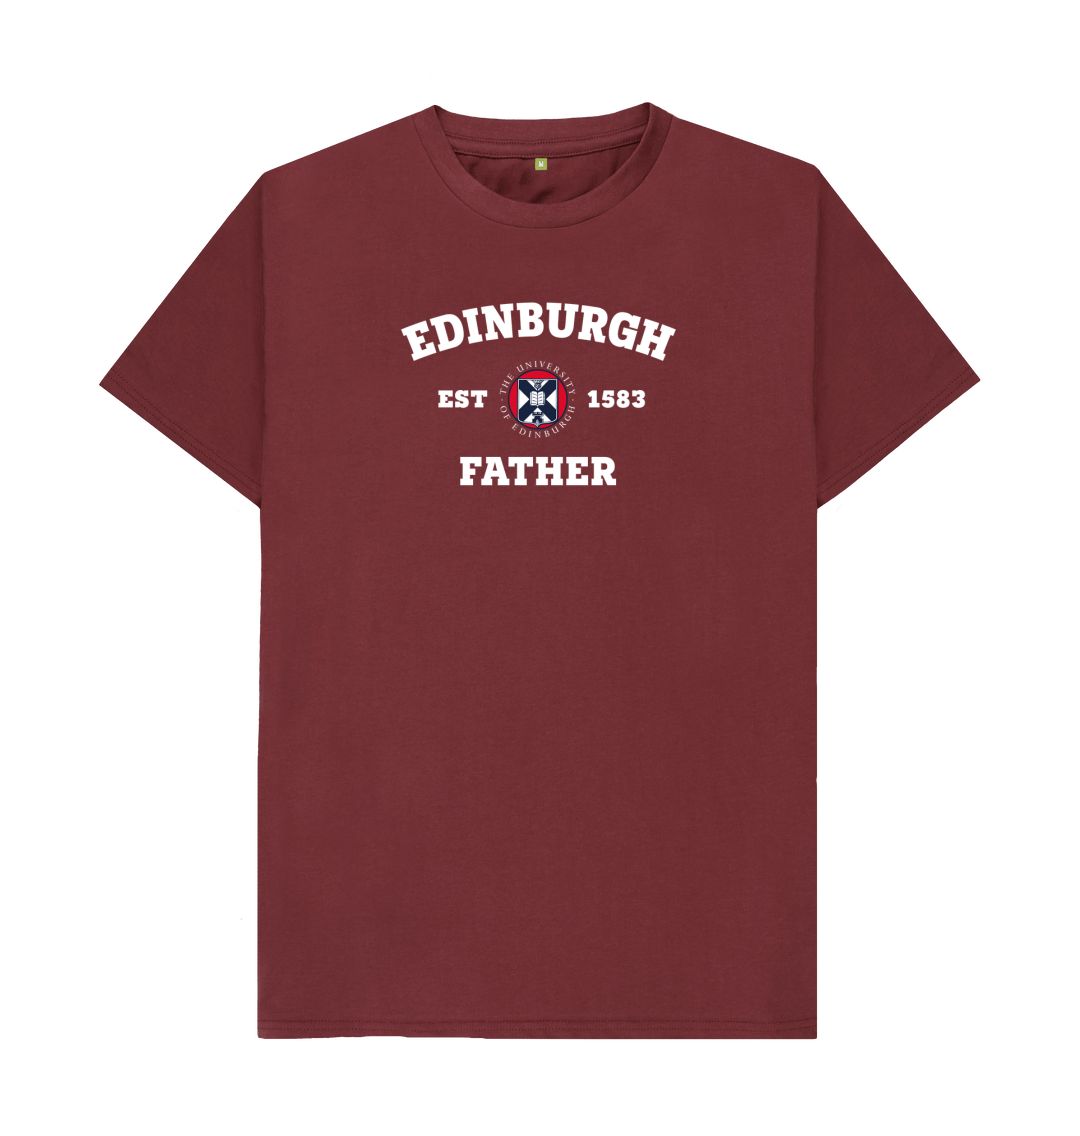 Red Wine Edinburgh Father T-Shirt